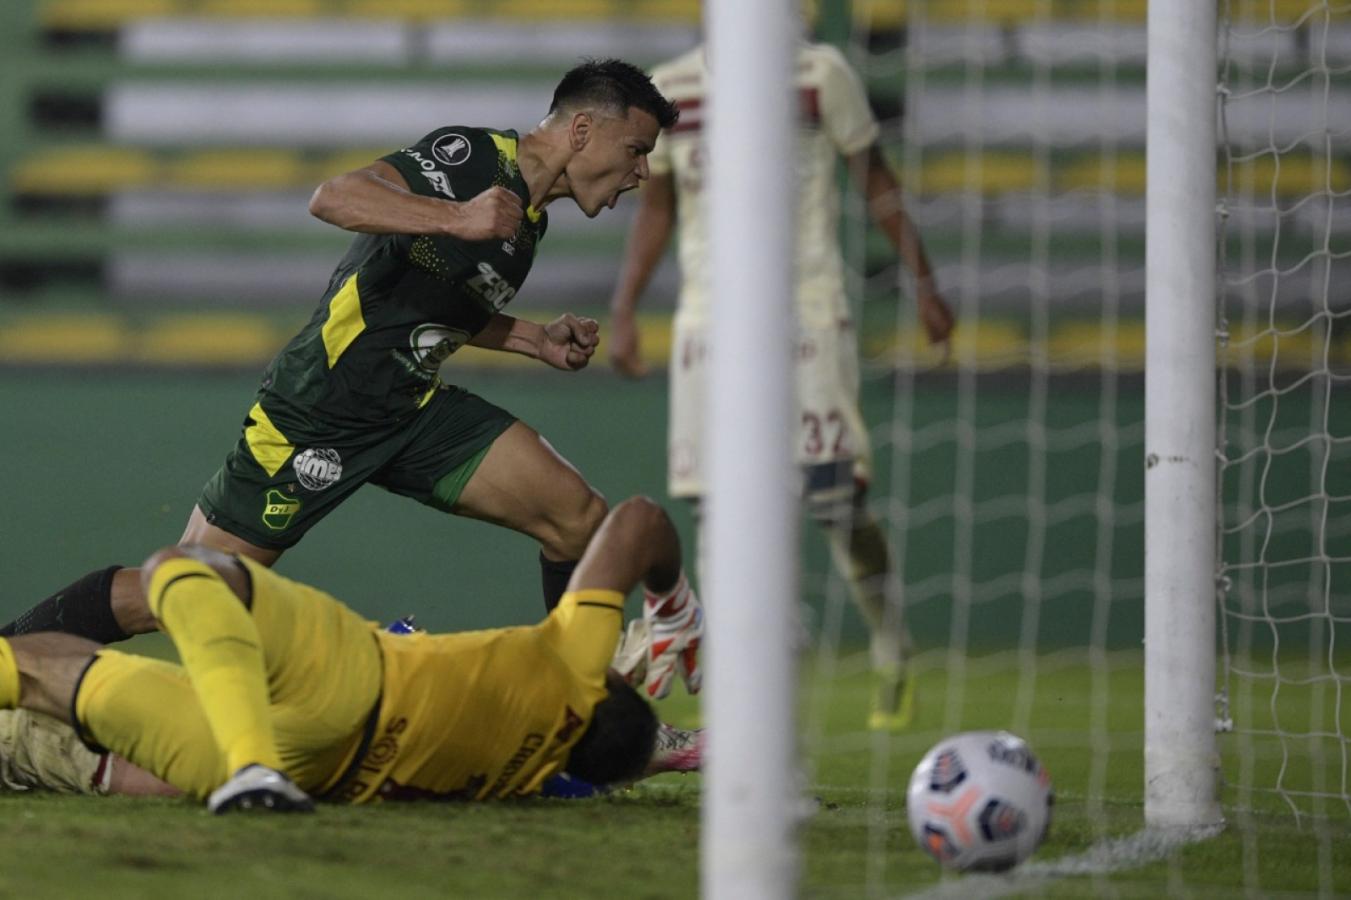 Imagen El momento exacto del gol. JUAN MABROMATA, AFP